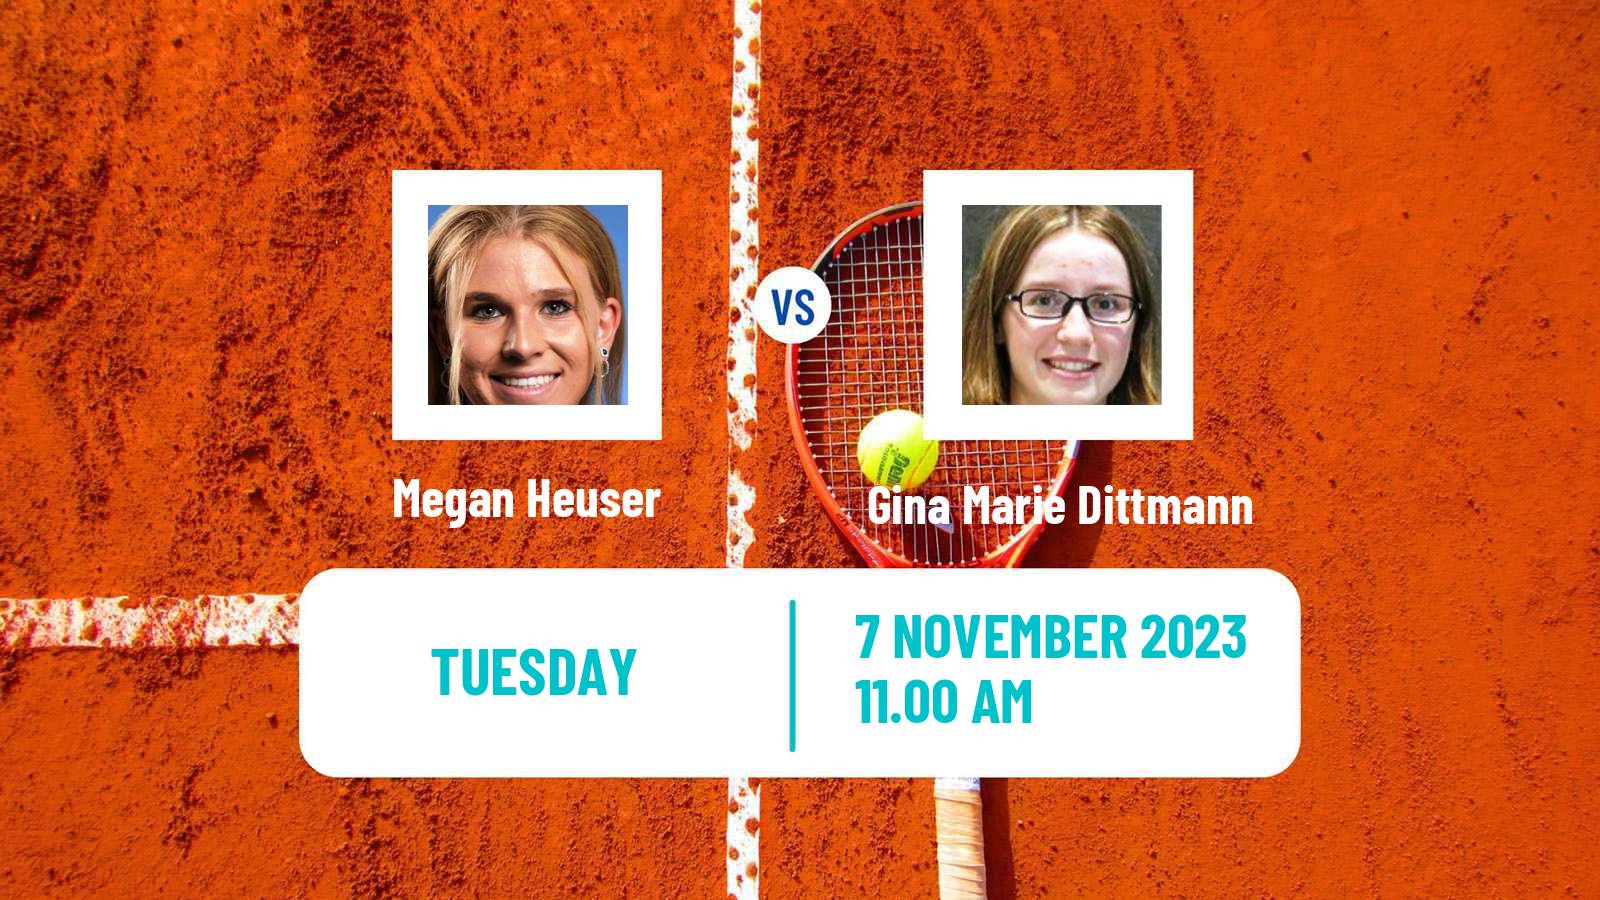 Tennis ITF W15 Champaign Il Women Megan Heuser - Gina Marie Dittmann